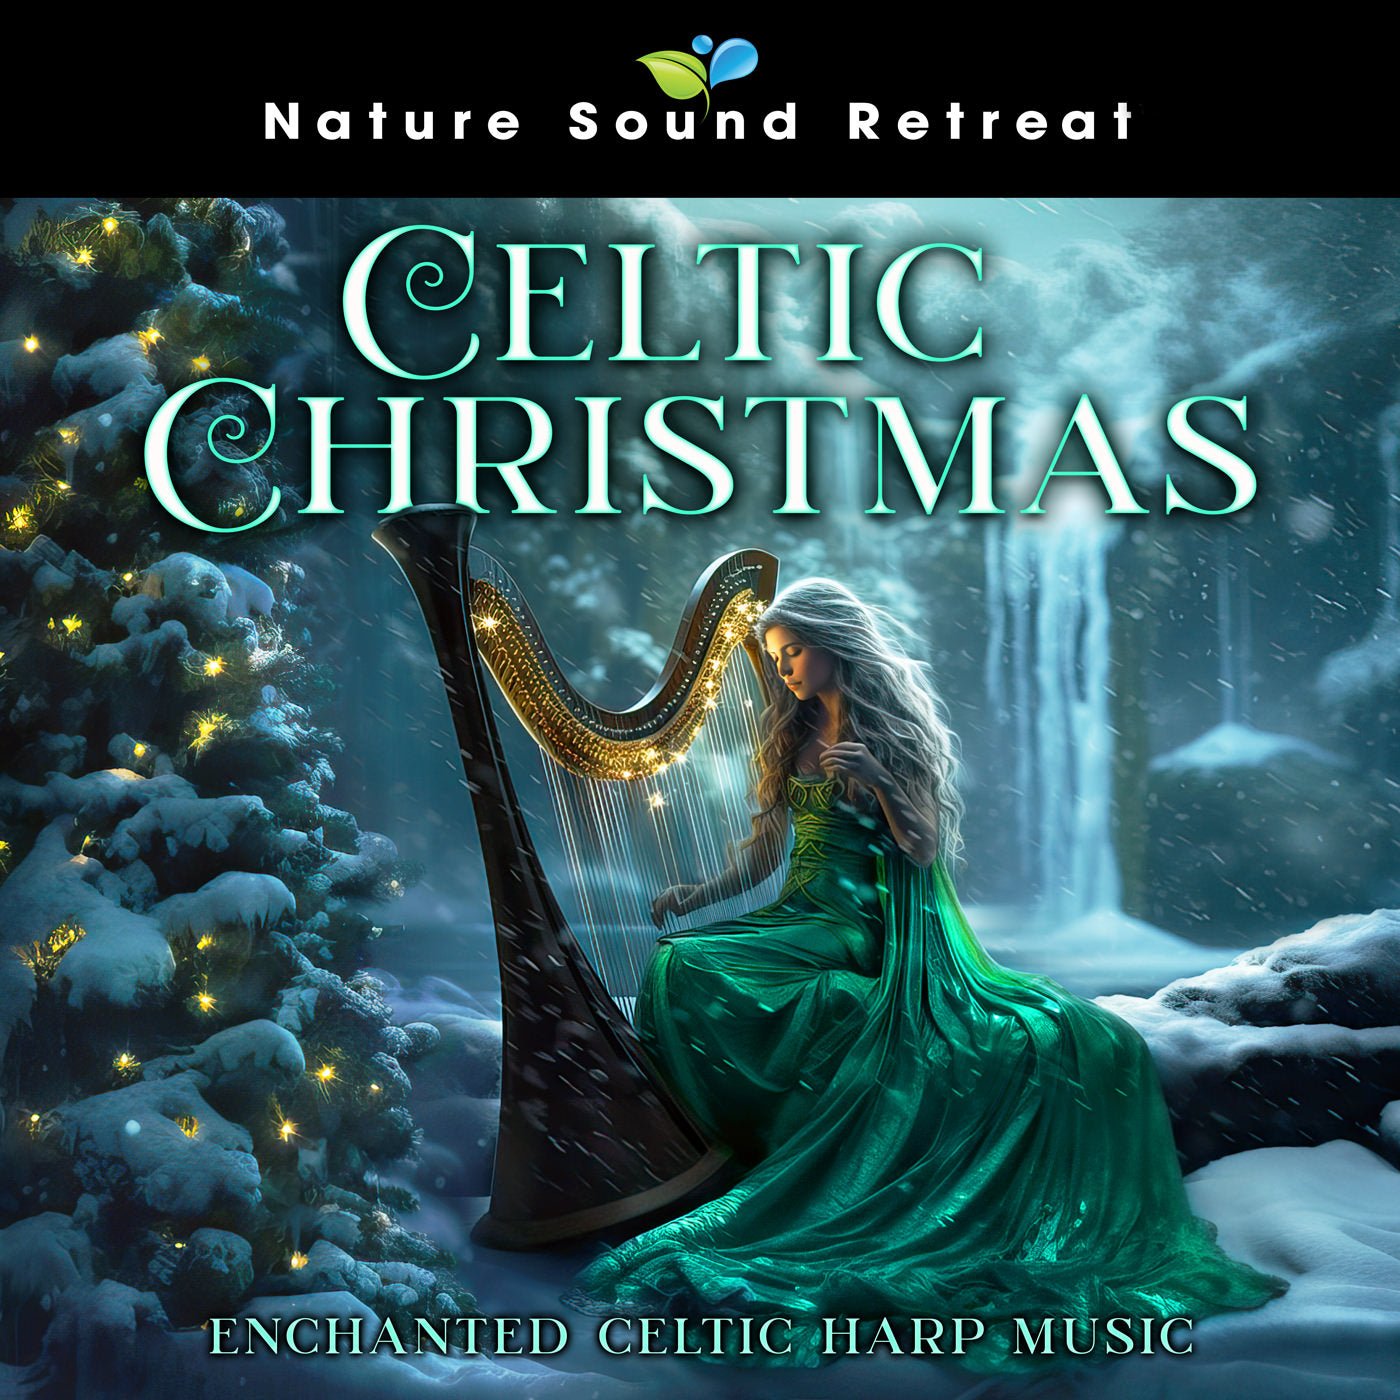 Celtic Christmas - Enchanted Celtic Harp Music - Nature Sound Retreat